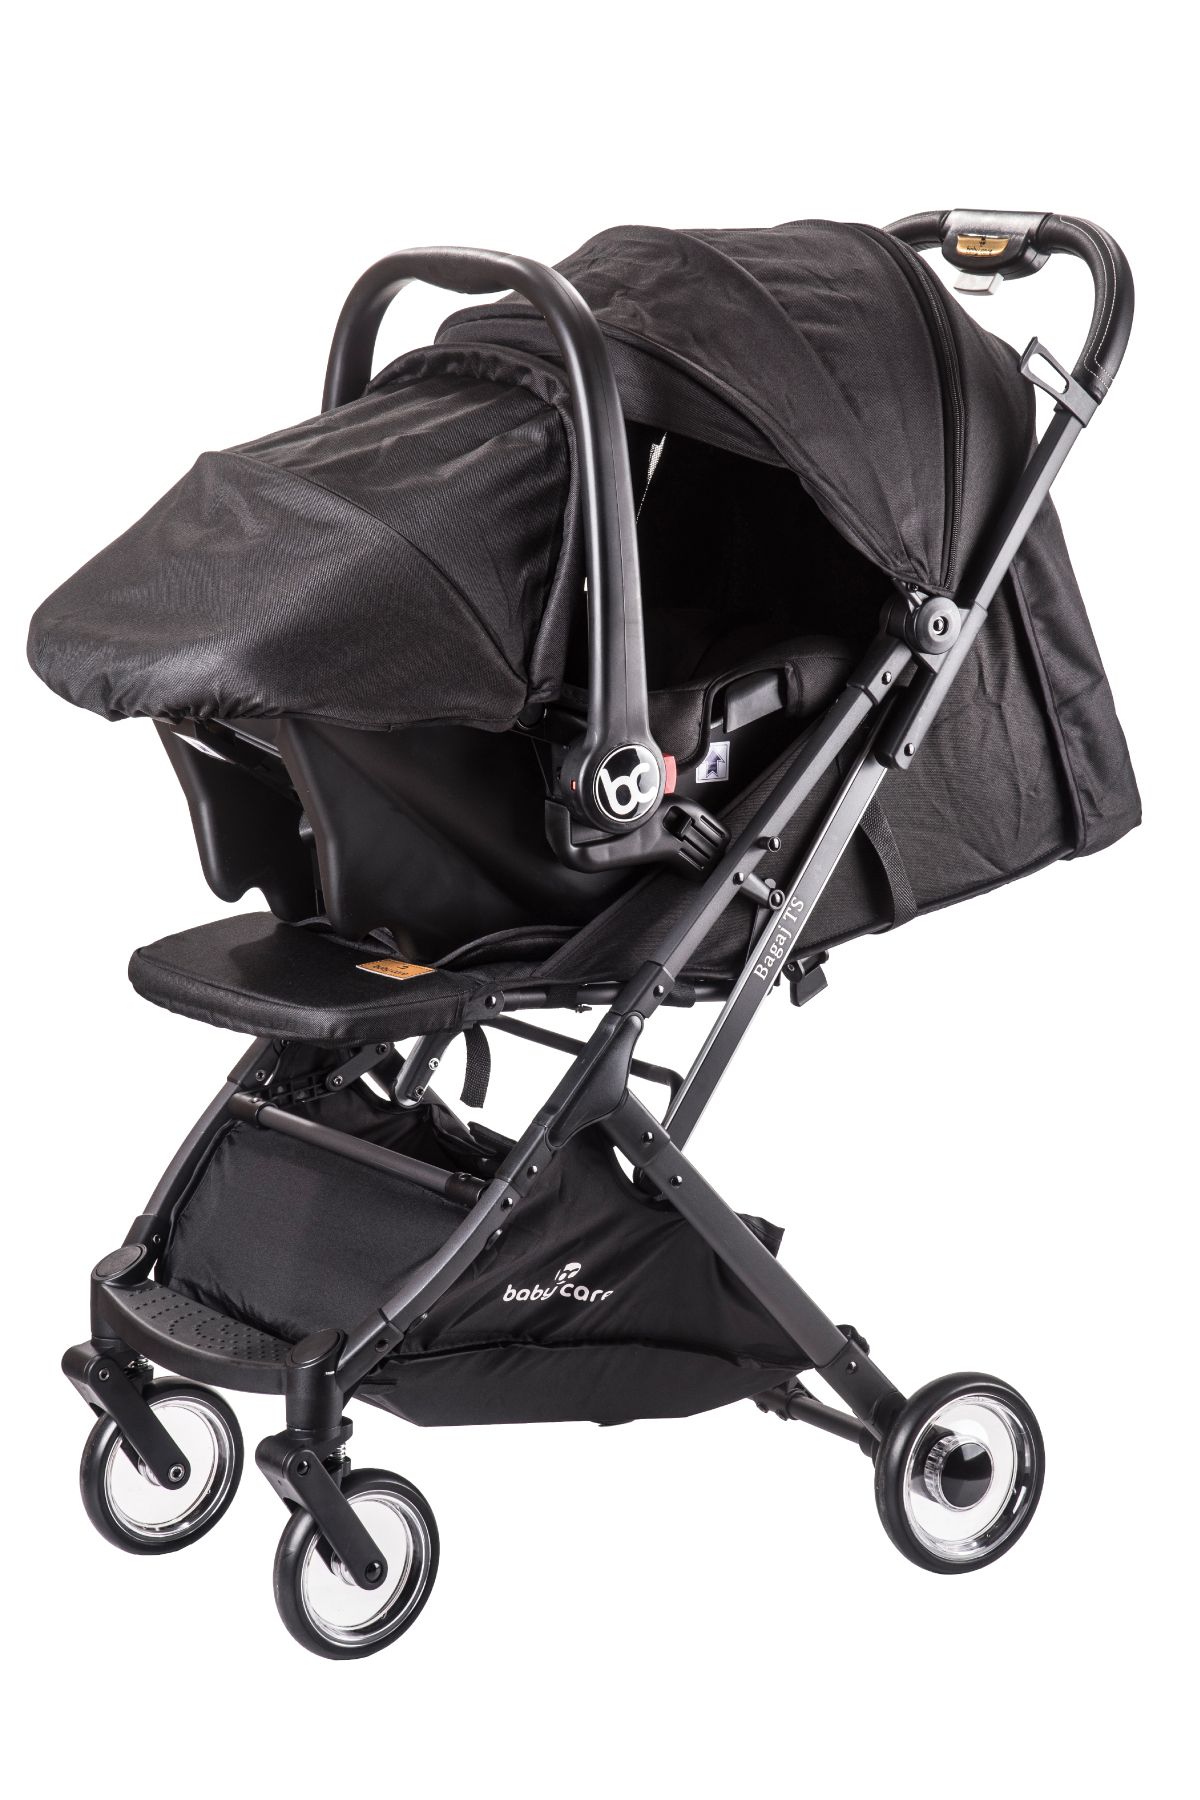 Baby Care Babycare Bagaj Travel Sistem Kabin Bebek Arabası Siyah